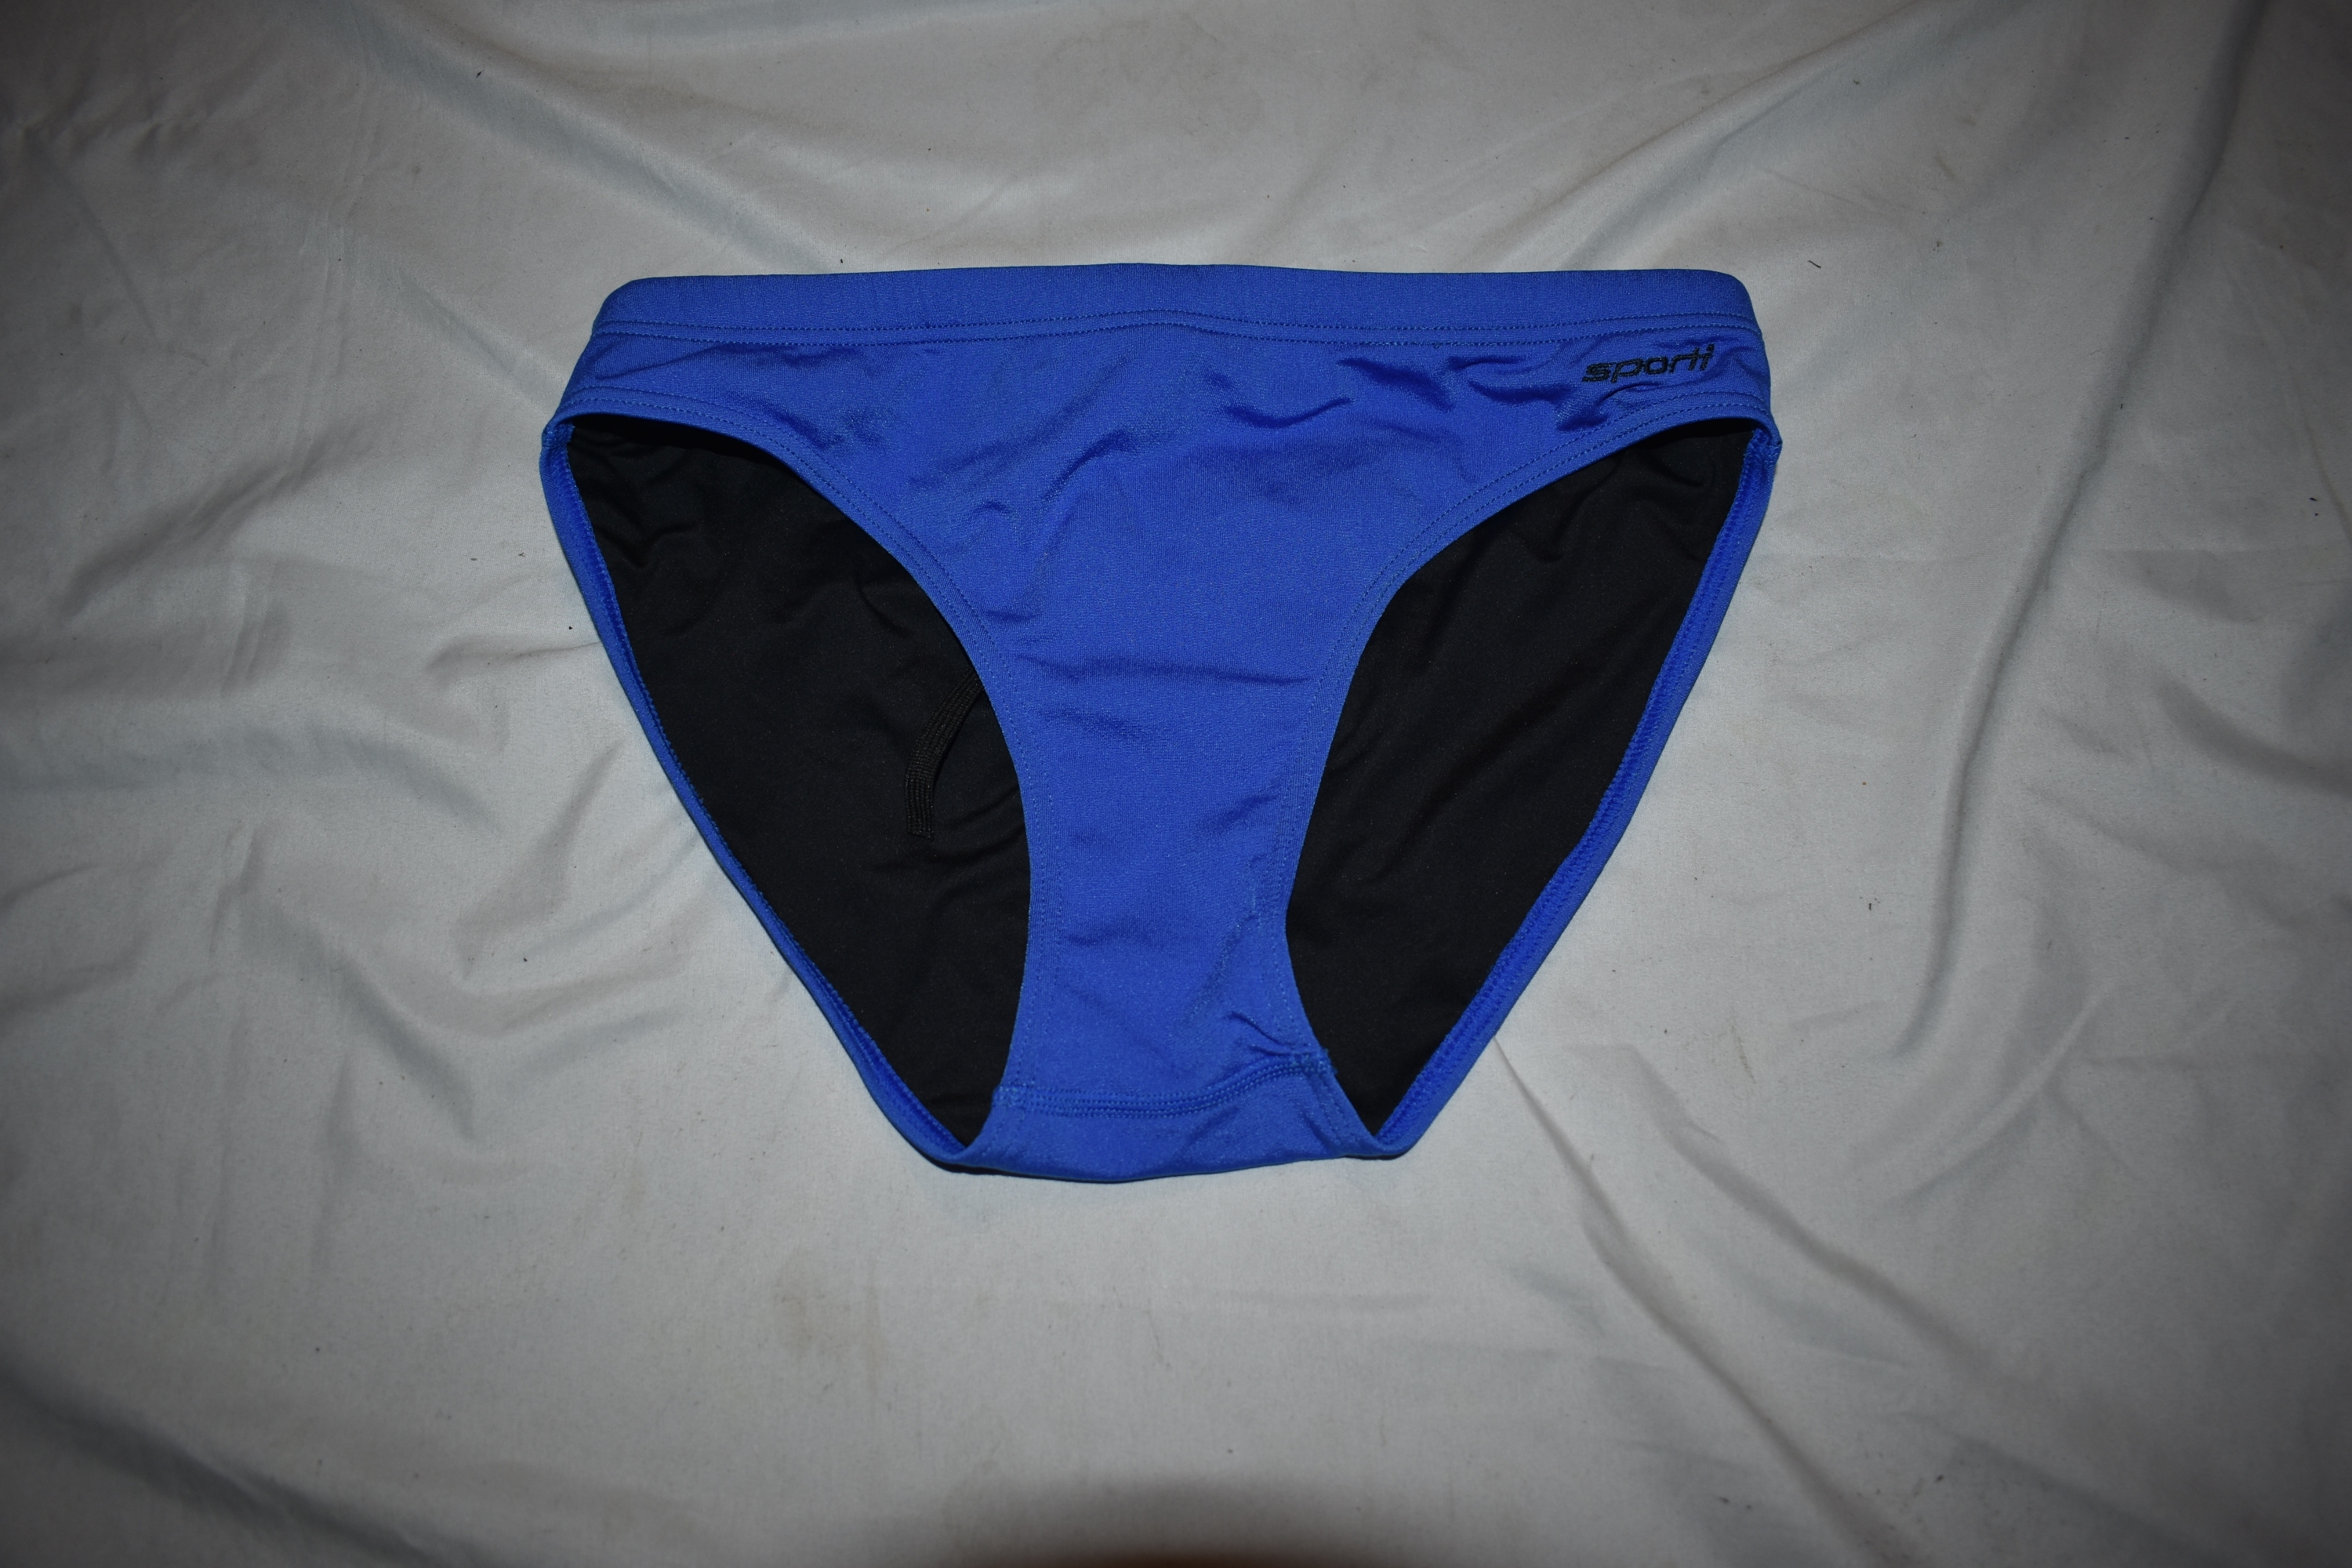 Sporti Men's Swimsuit, Blue, Size 34 - New Condition!